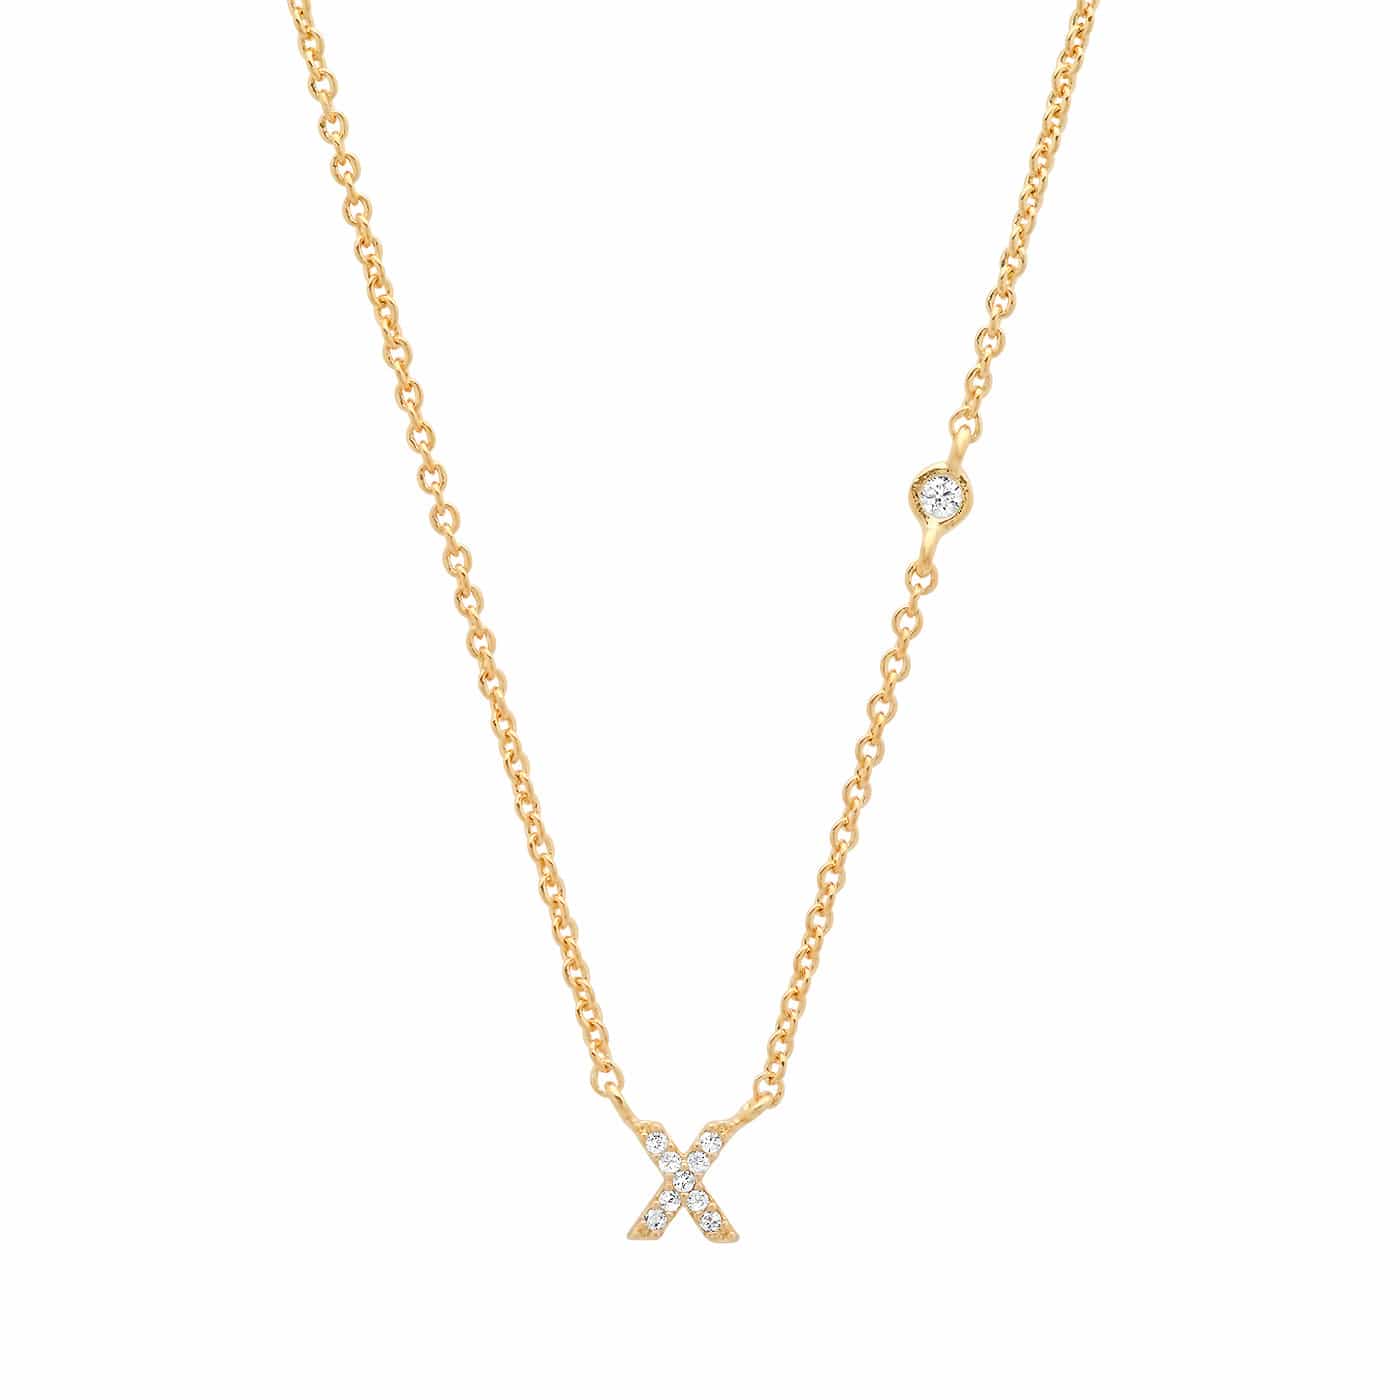 TAI JEWELRY Necklace Gold / X CZ Initial Necklace